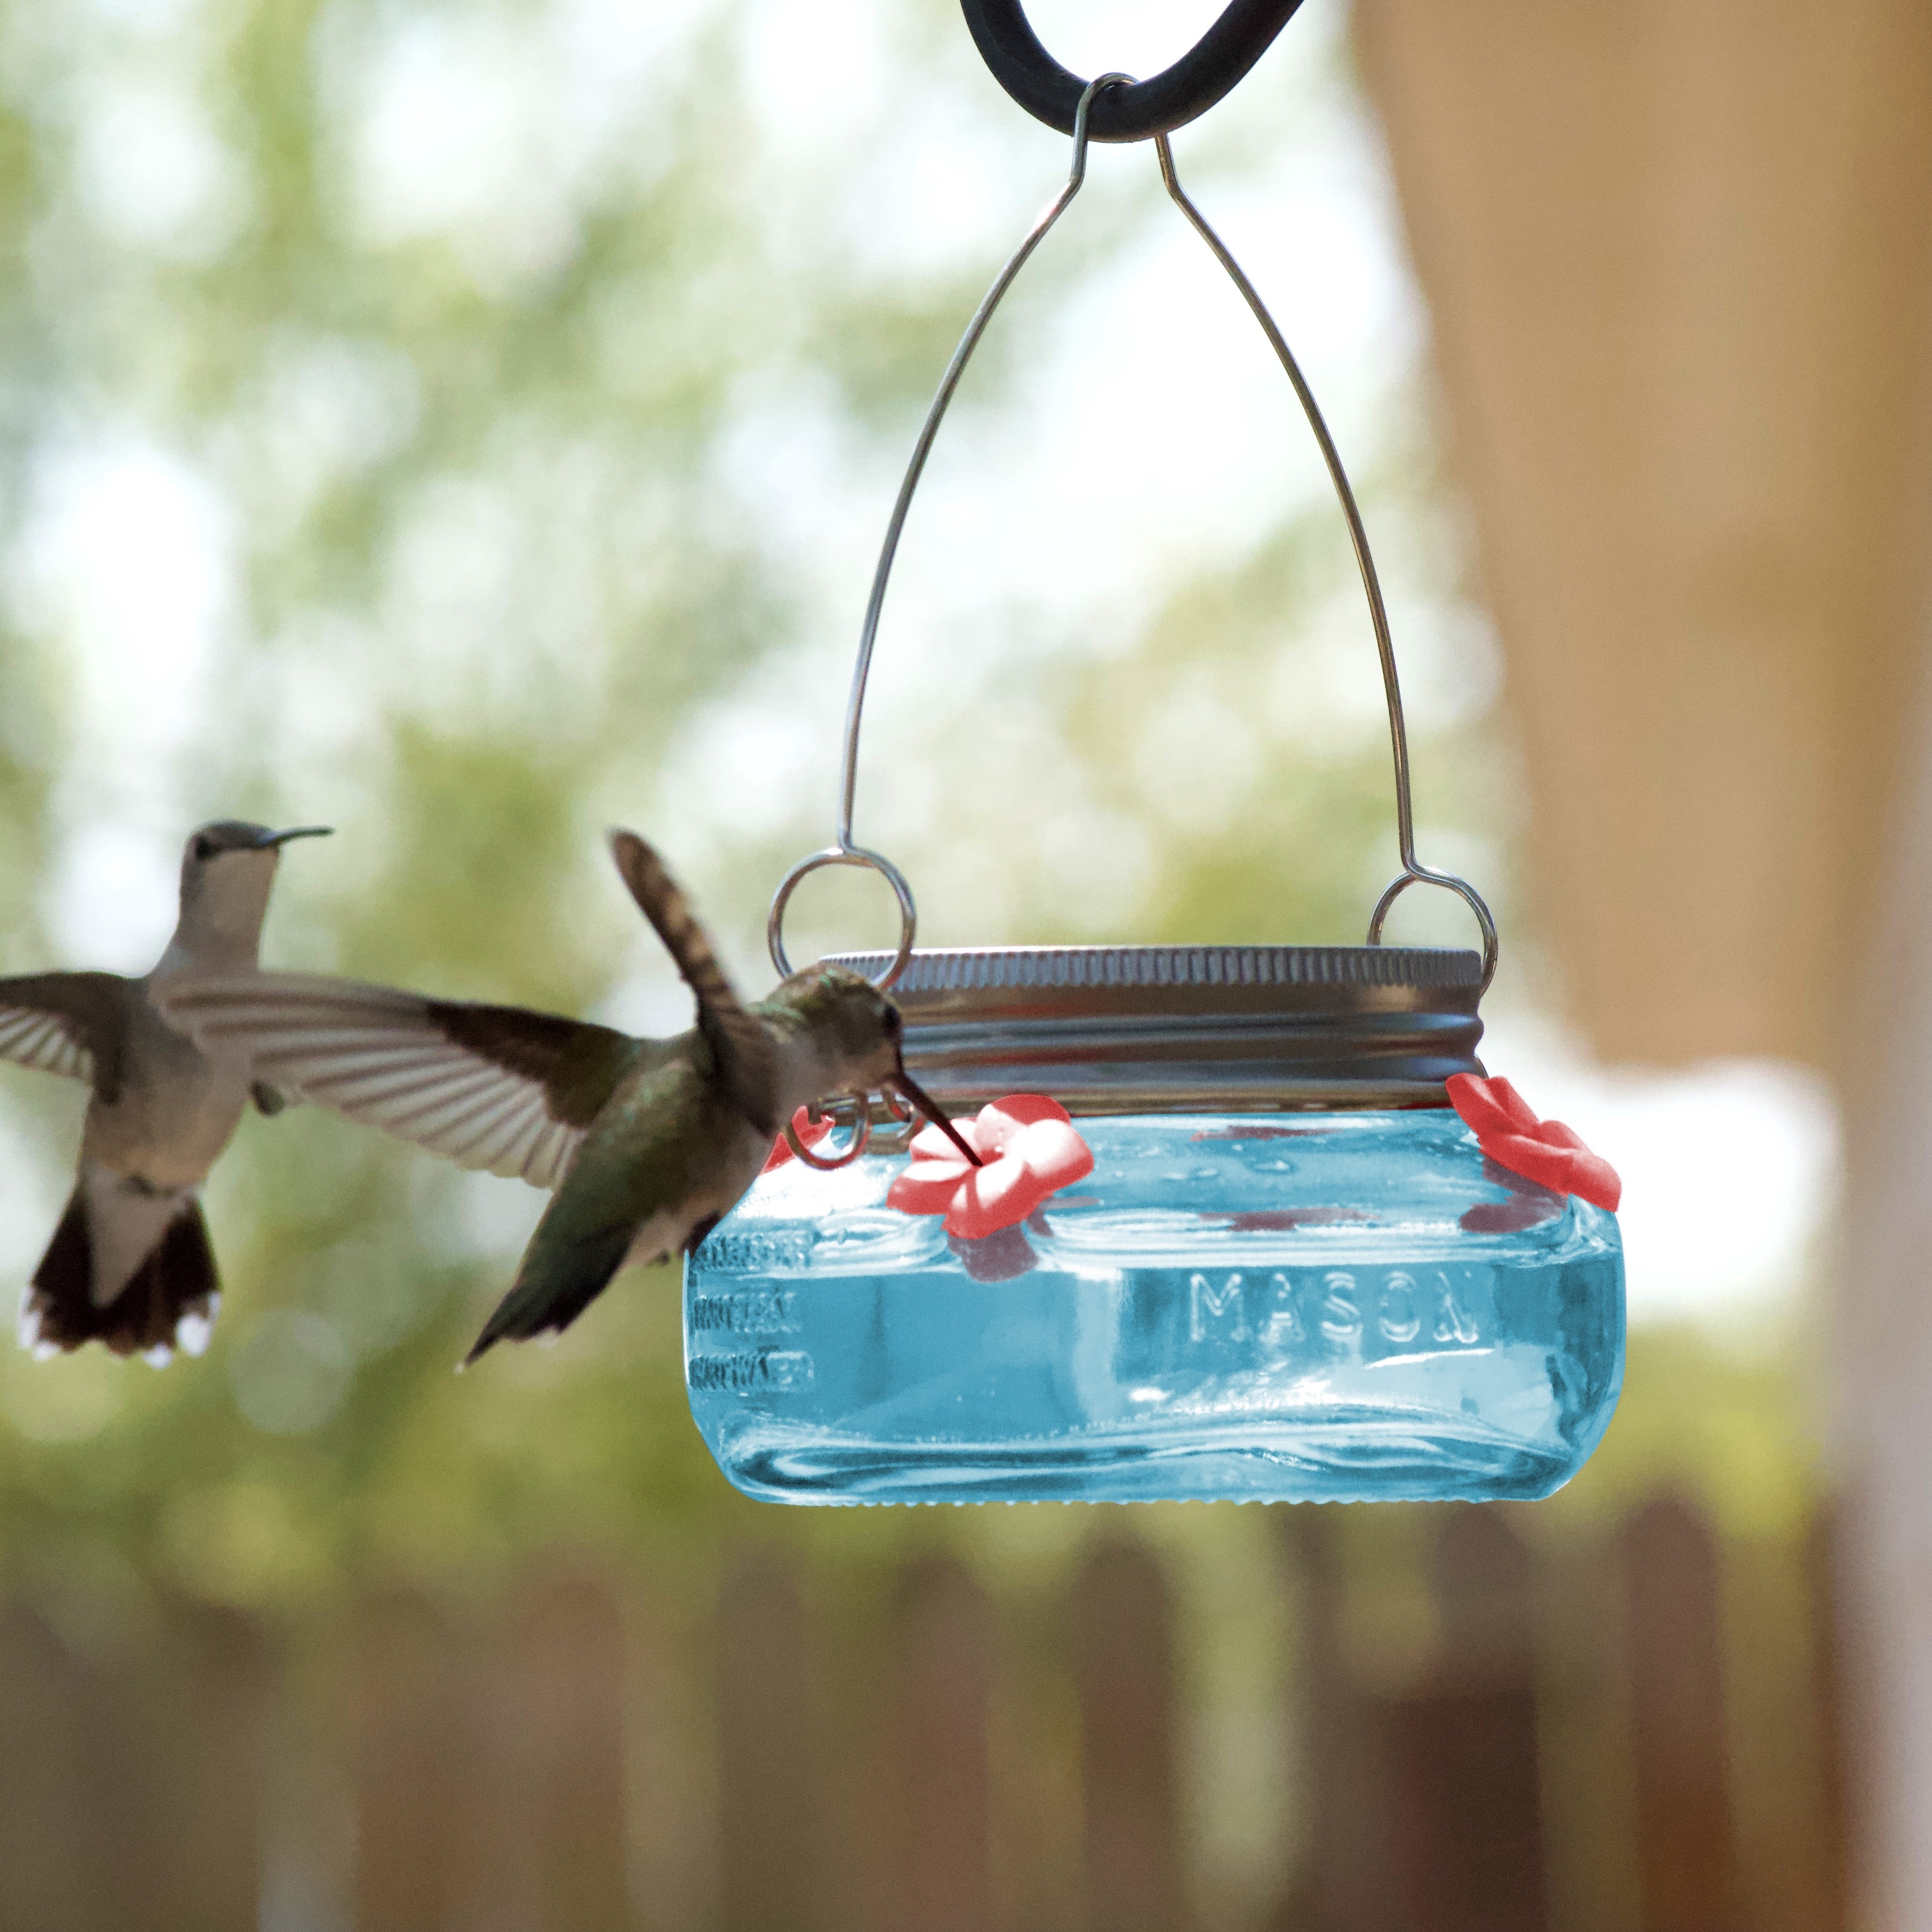 Two hummingbirds hover near a mason jar feeder